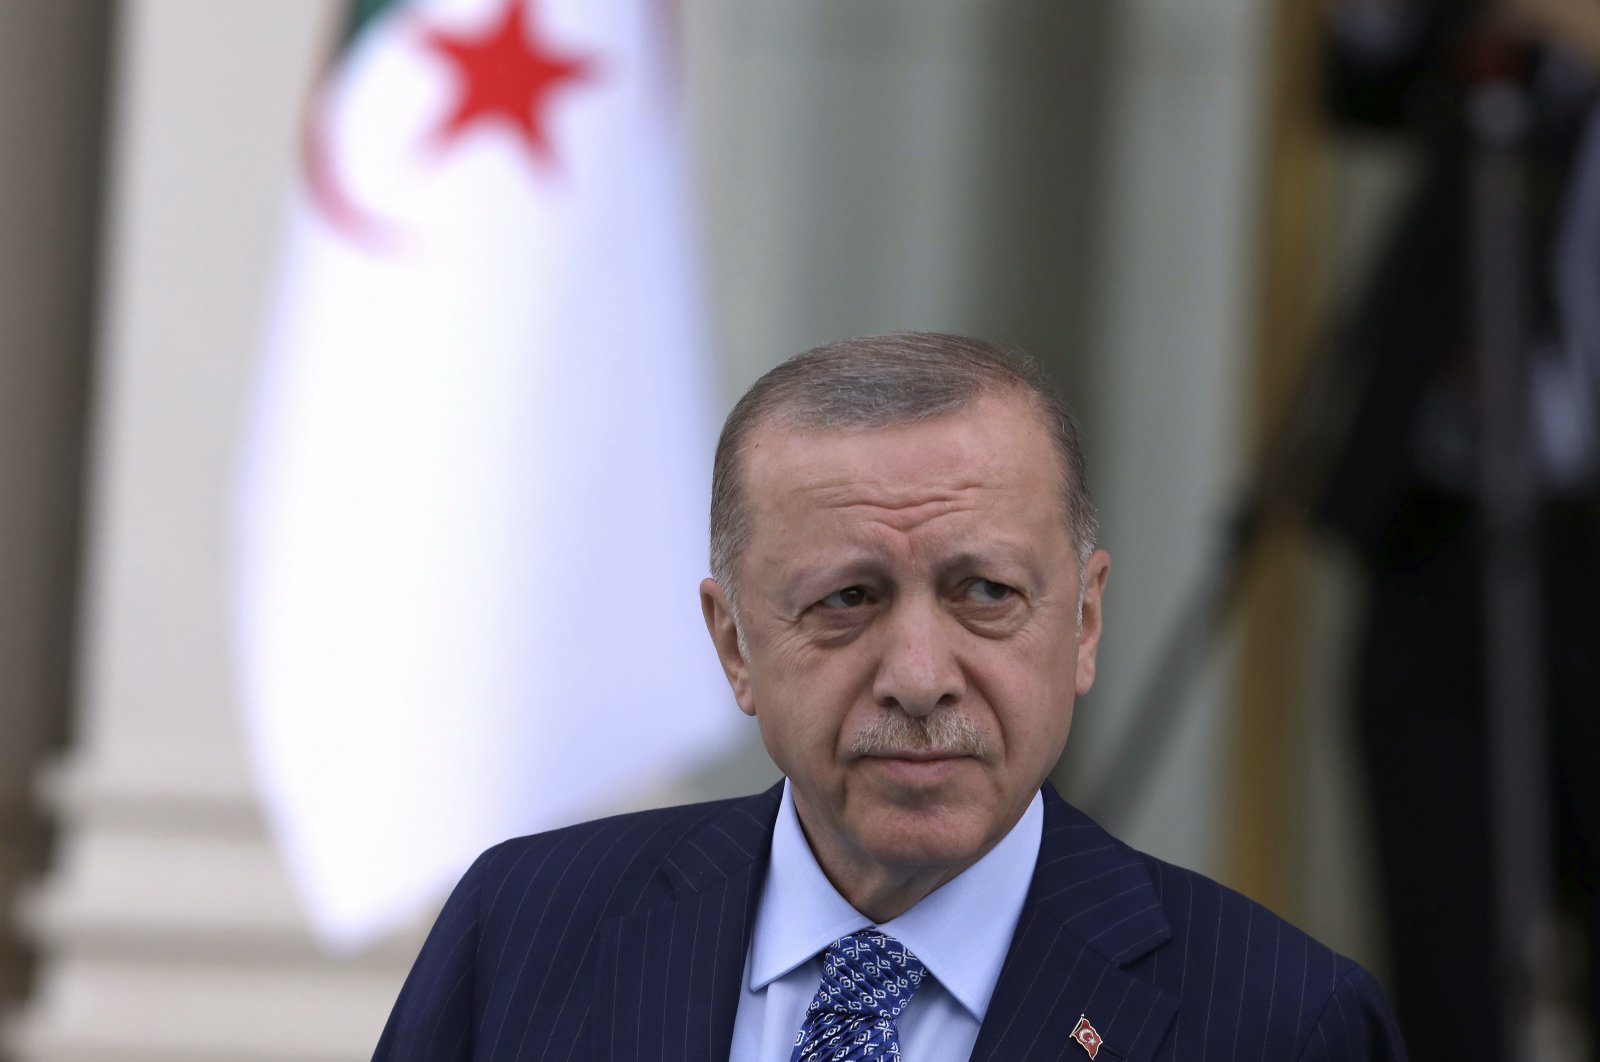 President Recep Tayyip Erdoğan arrives for a welcoming ceremony for his Algerian counterpart, Abdelmadjid Tebboune, in Ankara, Turkey, May 16, 2022. (AP Photo)